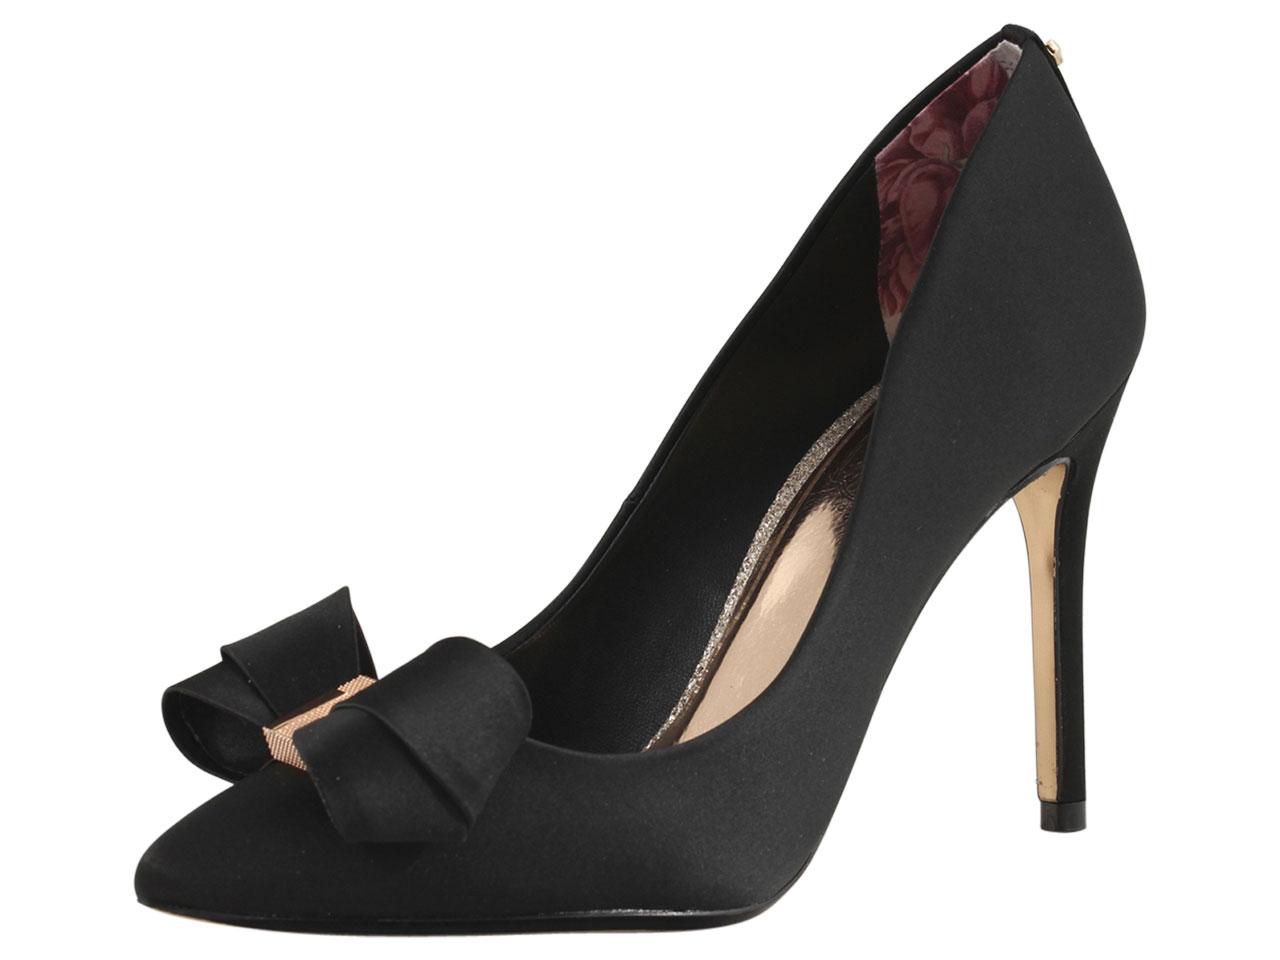 Ted Baker Women's Skalett Pumps Heels Shoes - Black - 7 B(M) US